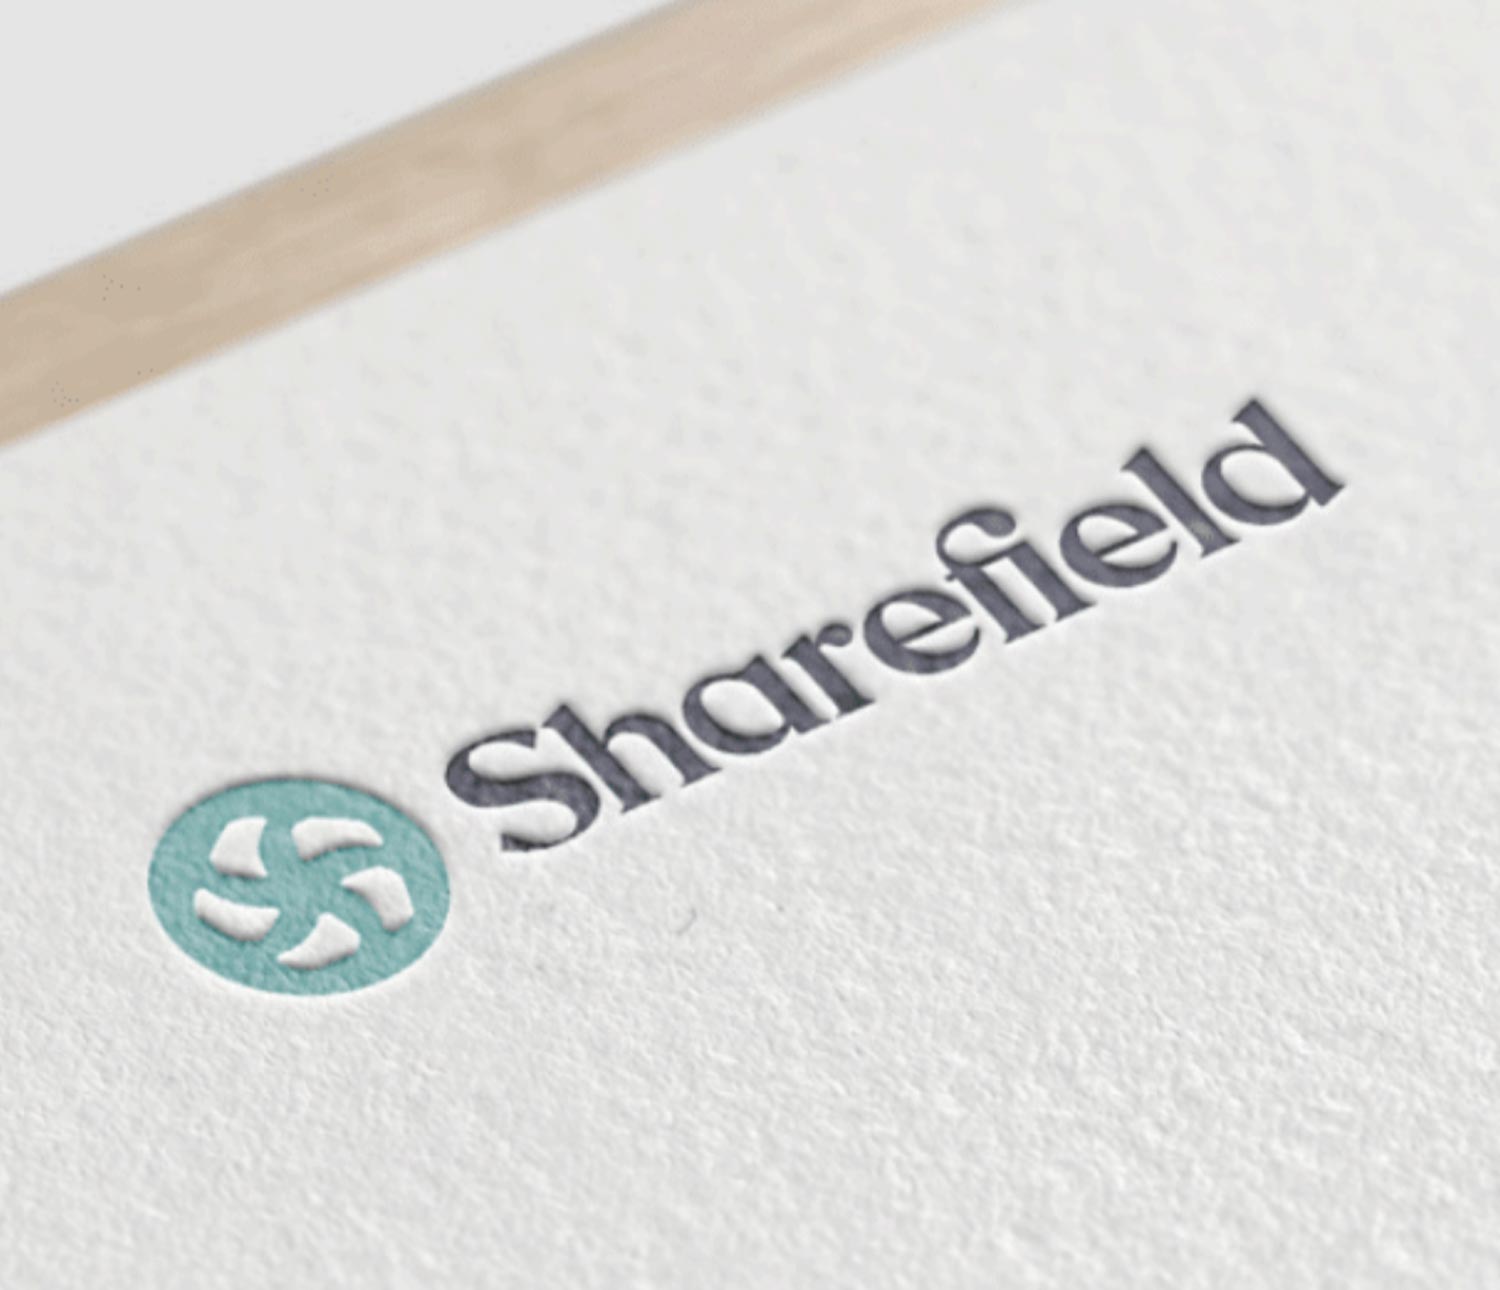 QCS Insurance rebrands to Sharefield